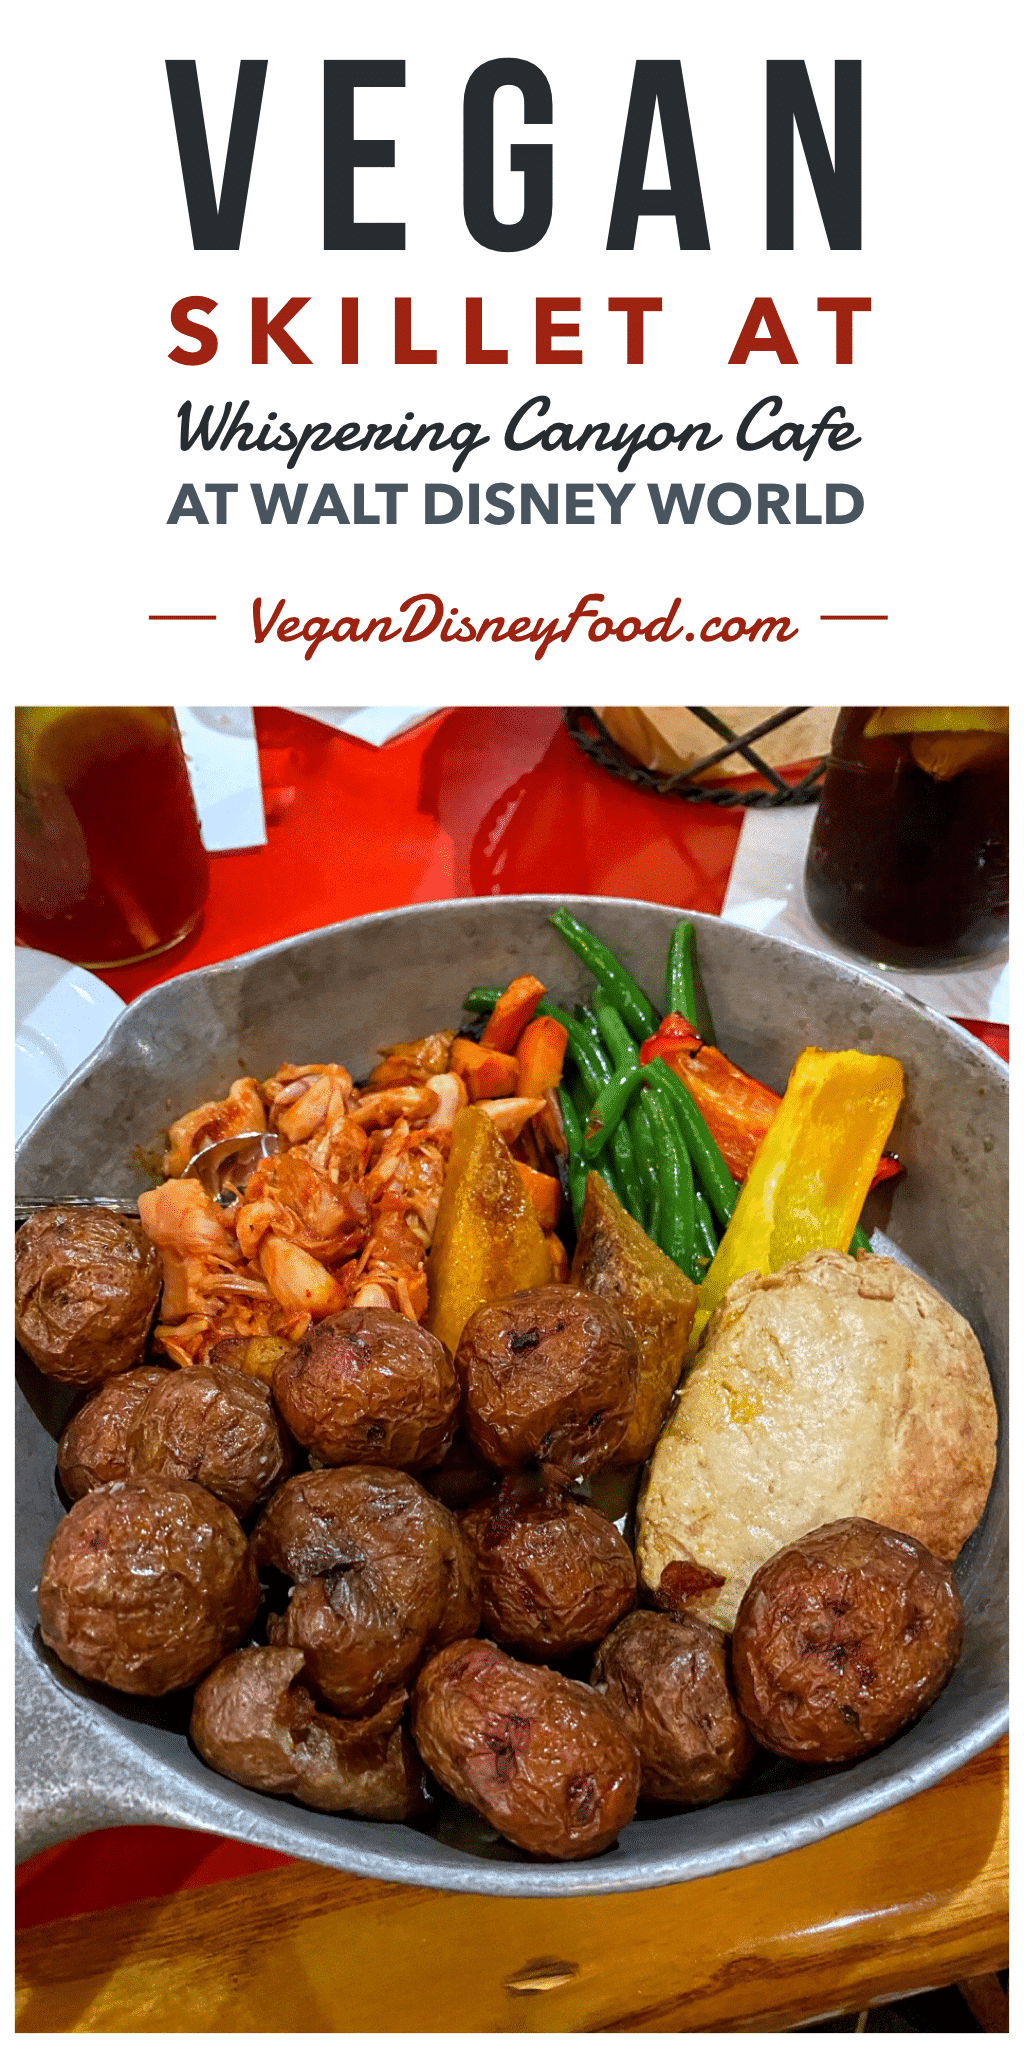 Vegan Food Review: Whispering Canyon Cafe in Disney’s Wilderness Lodge at Walt Disney World